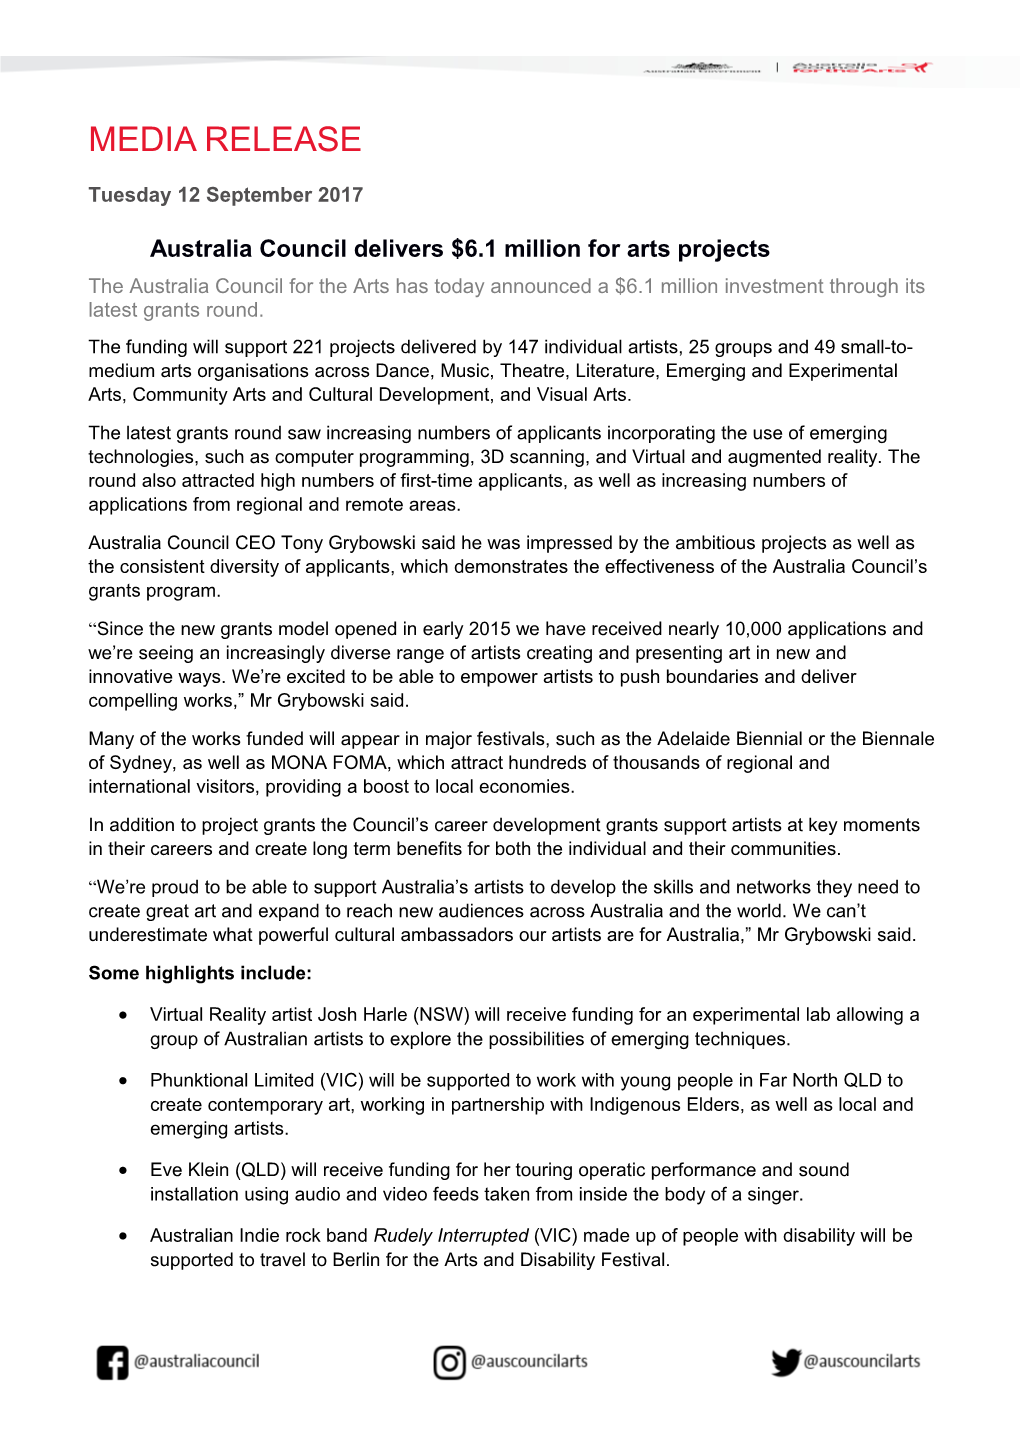 Australia Council Delivers $6.1 Million for Arts Projects